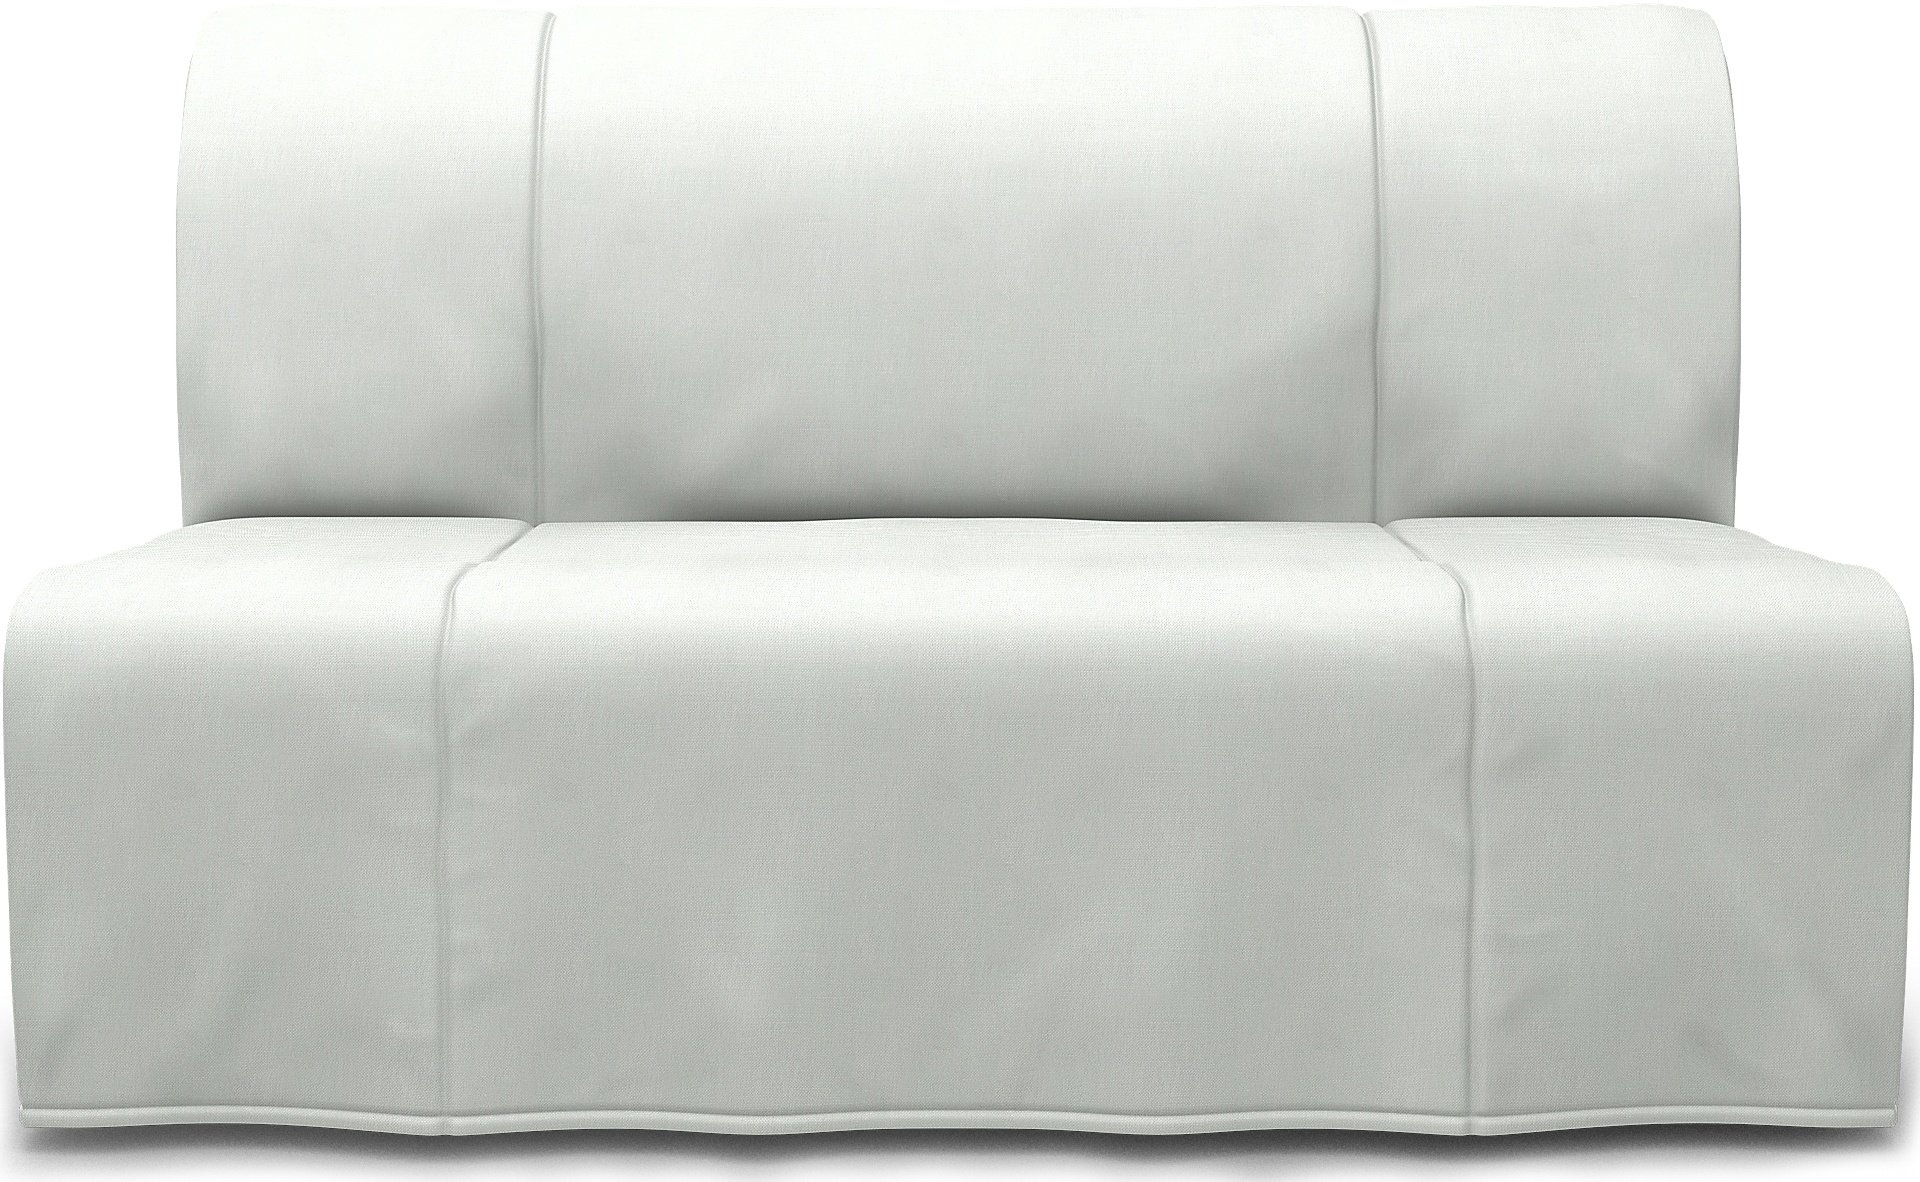 IKEA - Lycksele 2 Seater Bedsofa, Silver Grey, Linen - Bemz